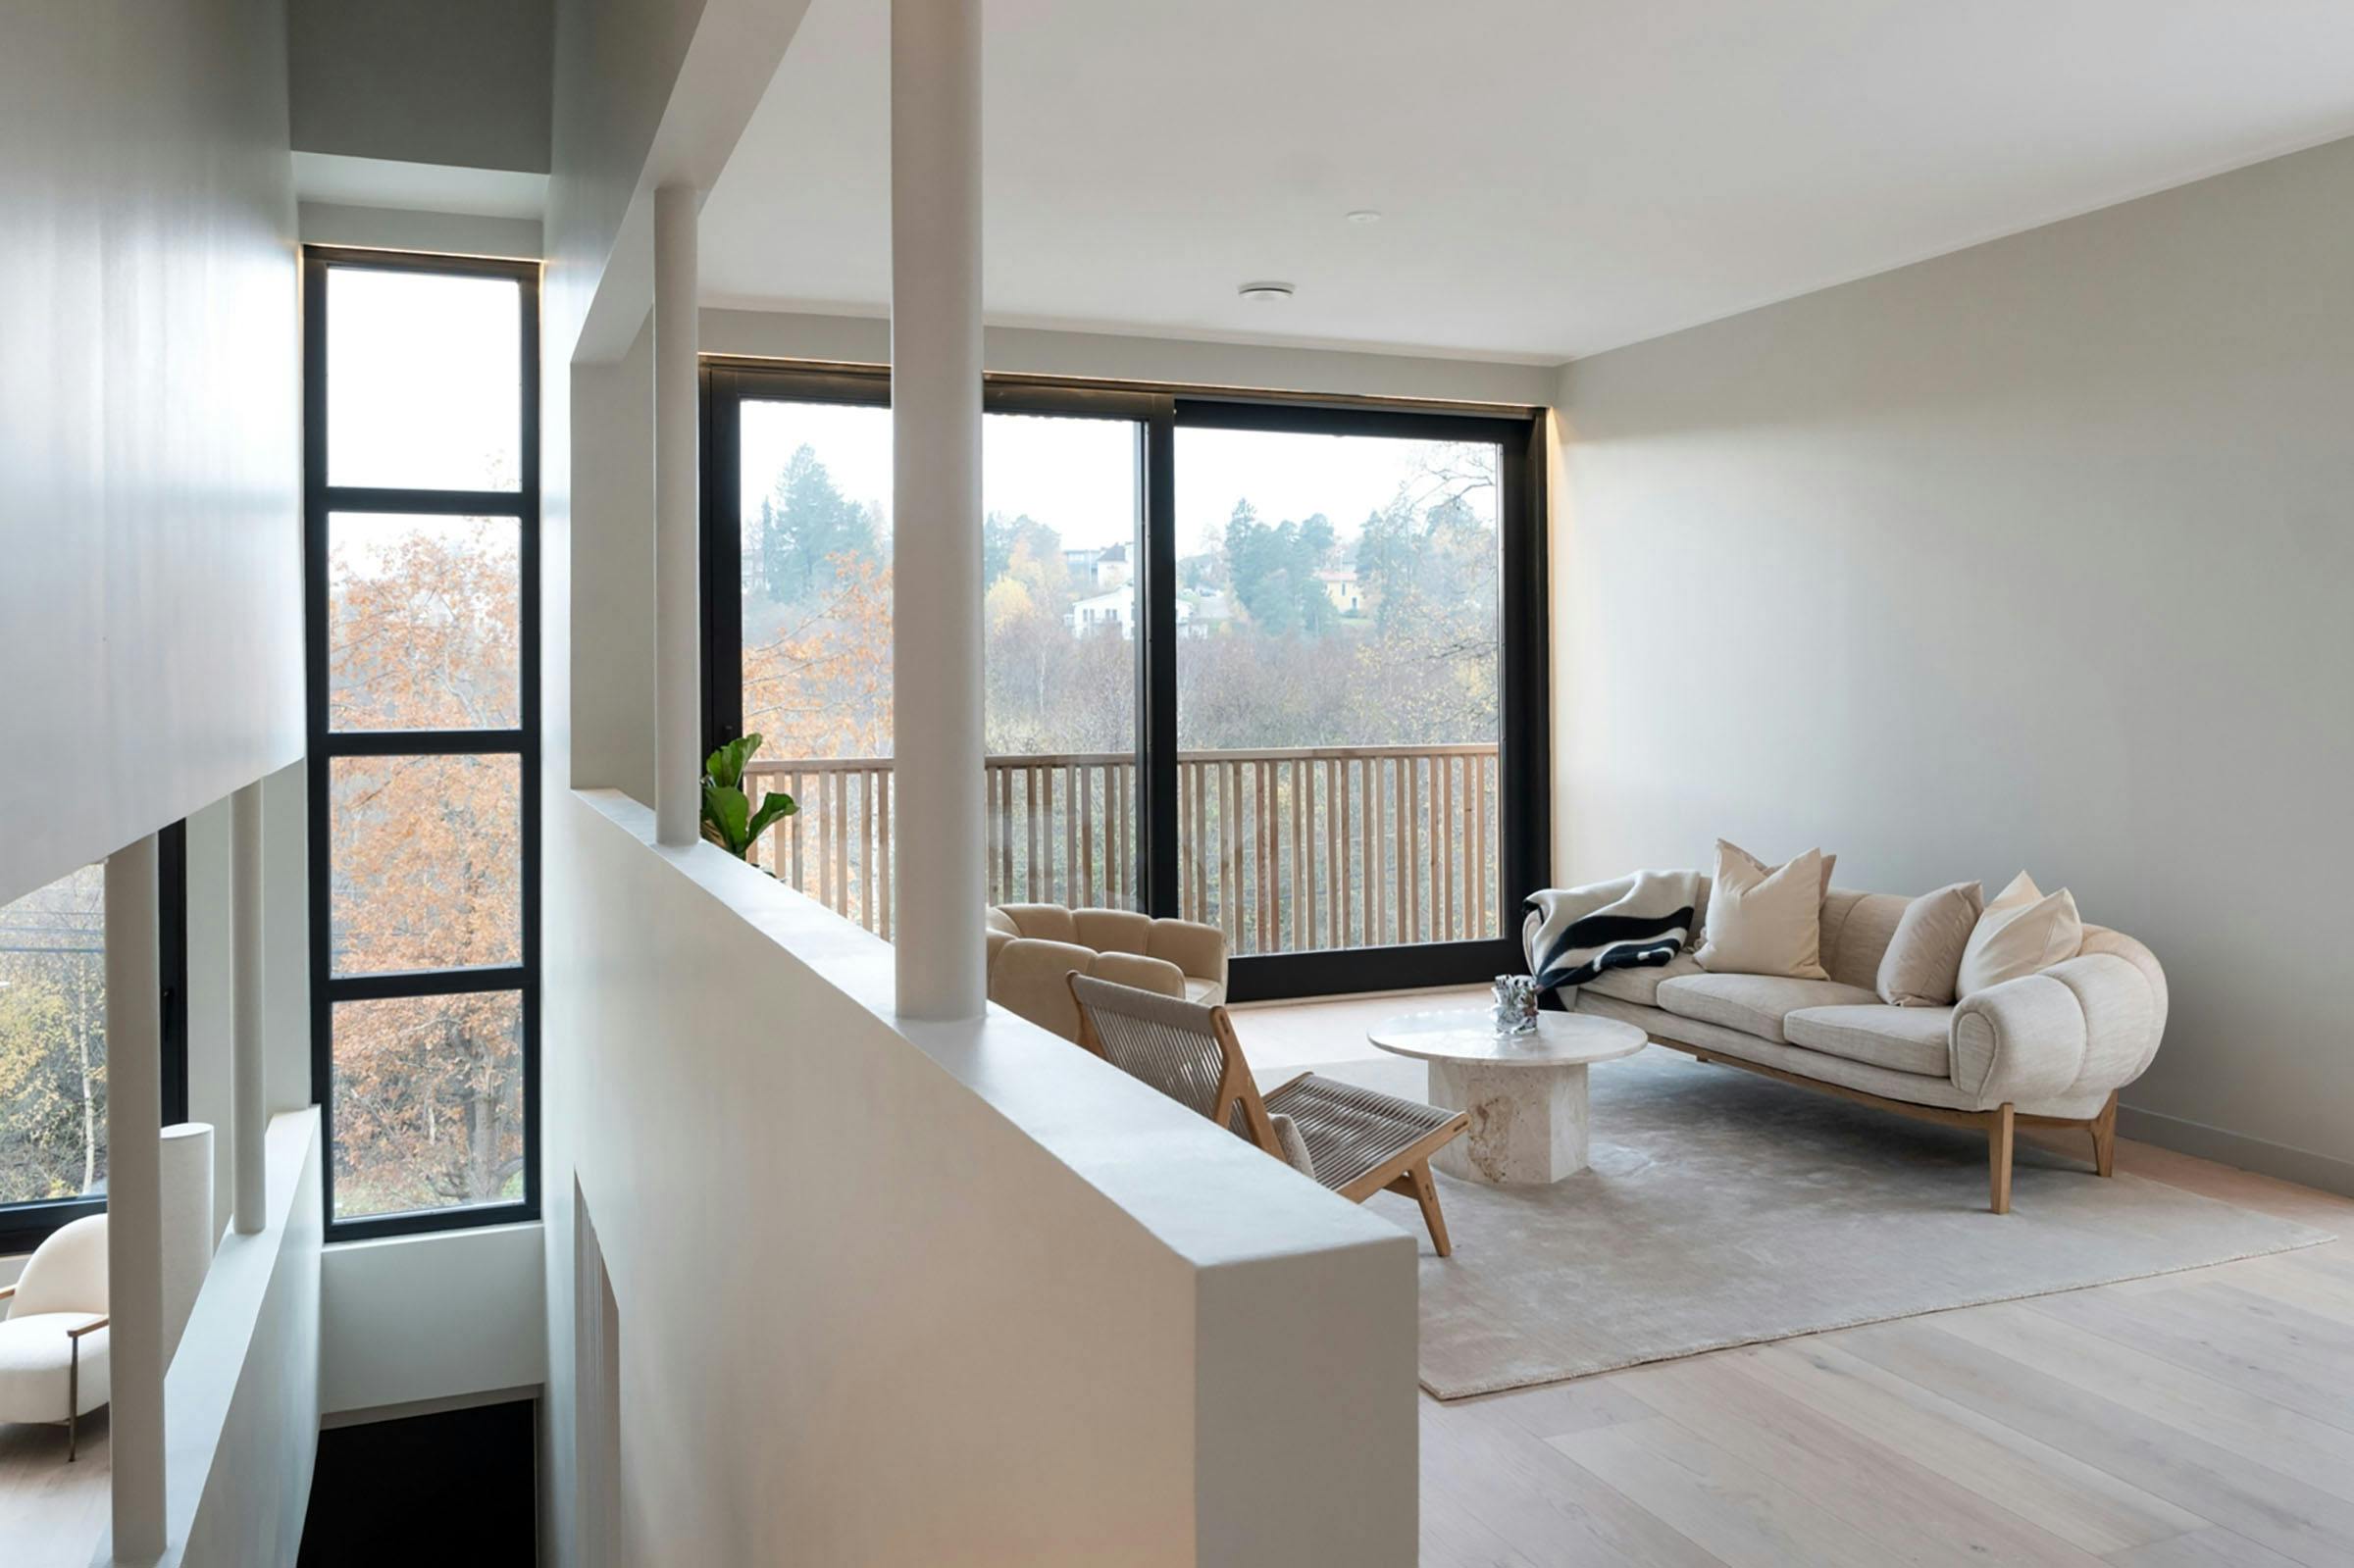 Krivaja Homes - Energy efficient windows